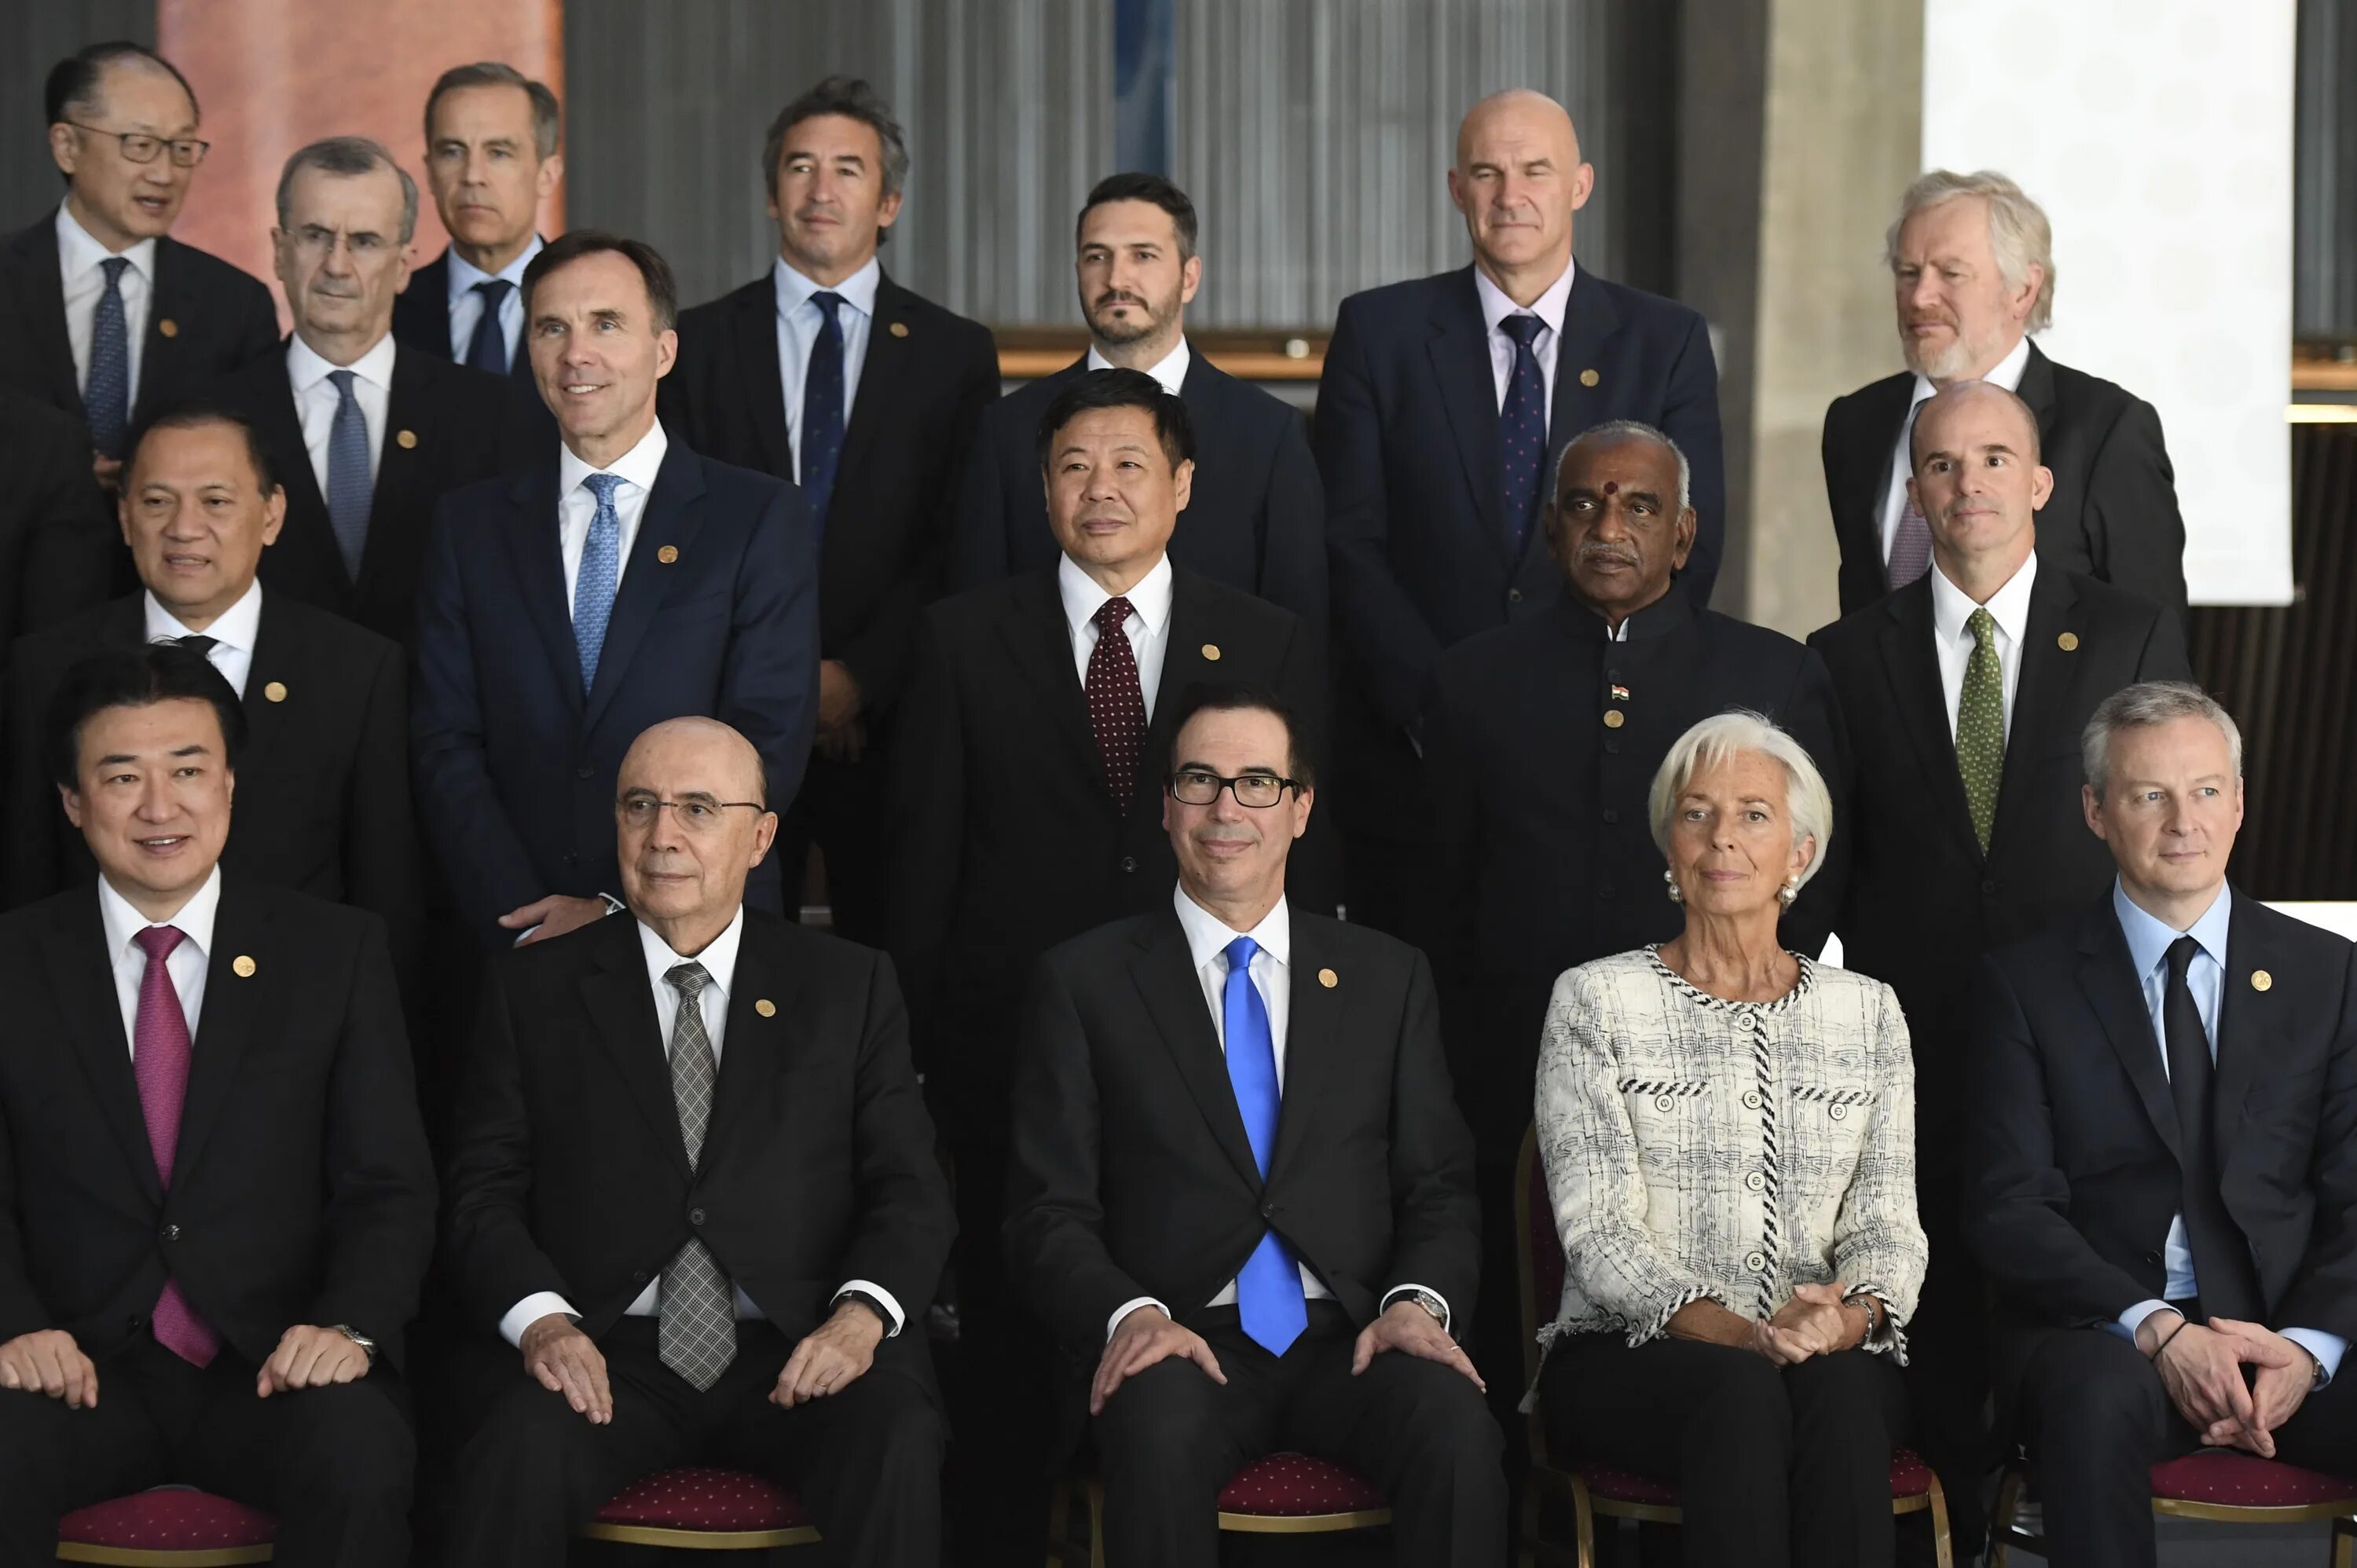 G20. G20 1999. Министры финансов g20. G7 g20.